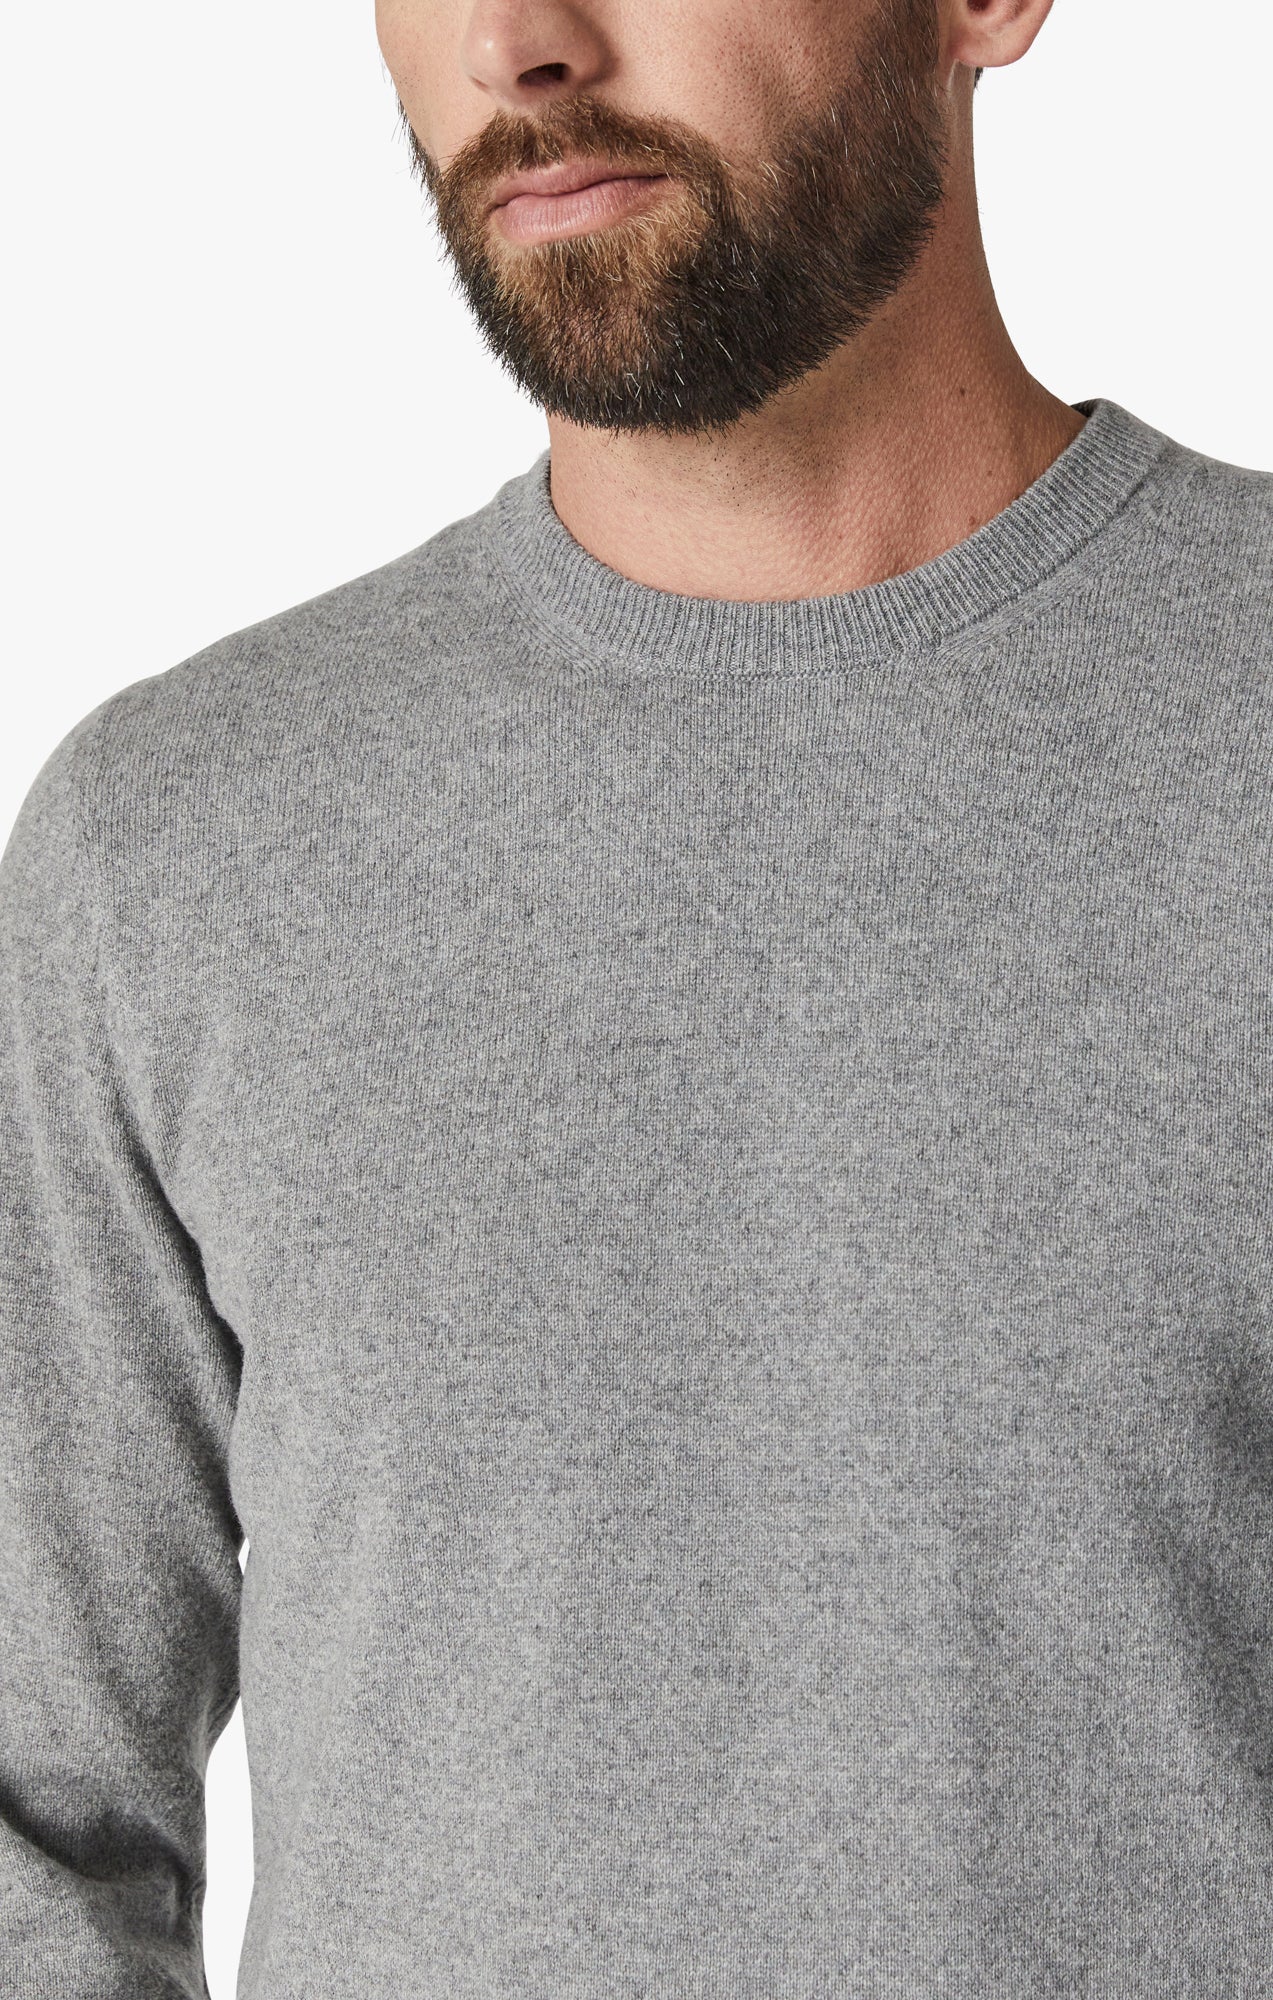 Cashmere Crew Neck Sweater In Grey Melange Image 6